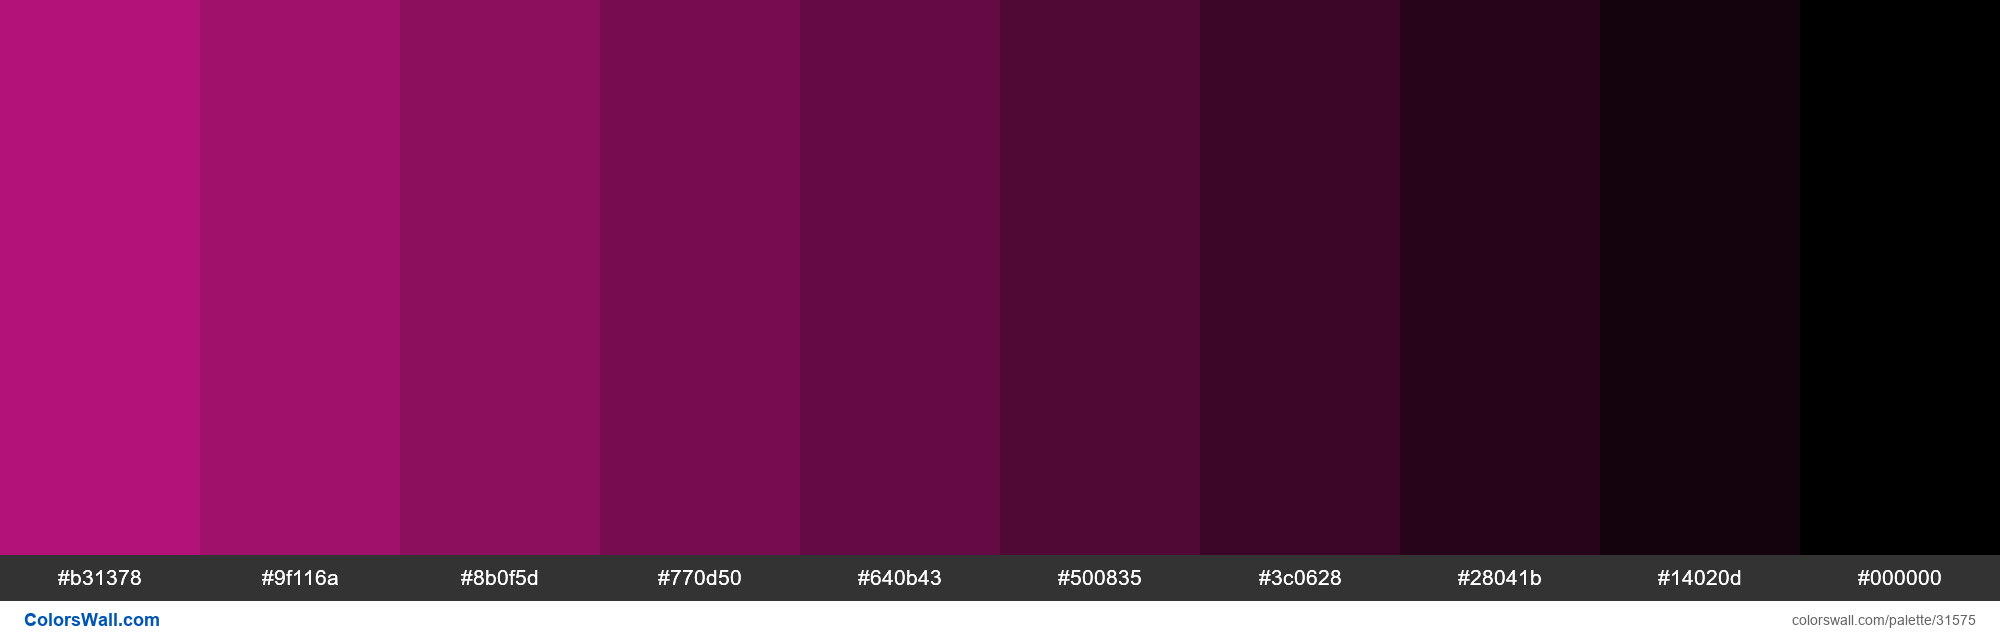 Grape mund Tom Audreath Shades X11 color Medium Violet Red #C71585 hex | ColorsWall